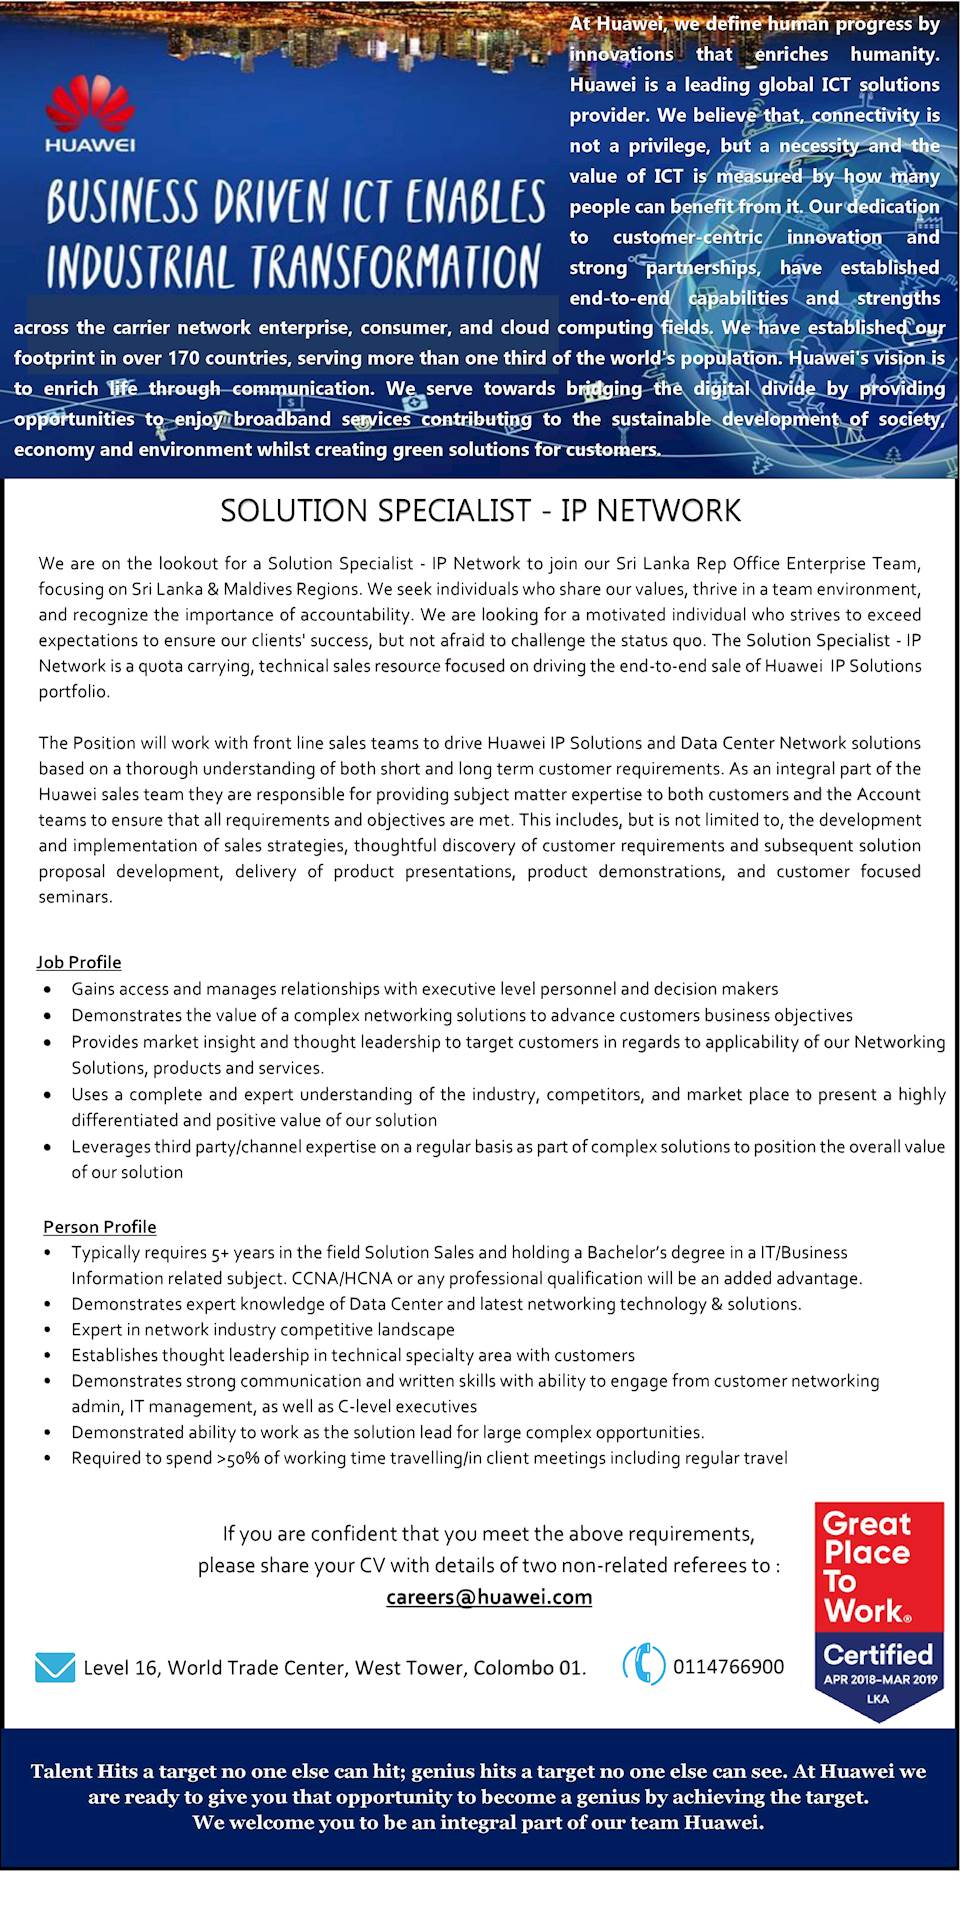 Solution Specialist - IP Network